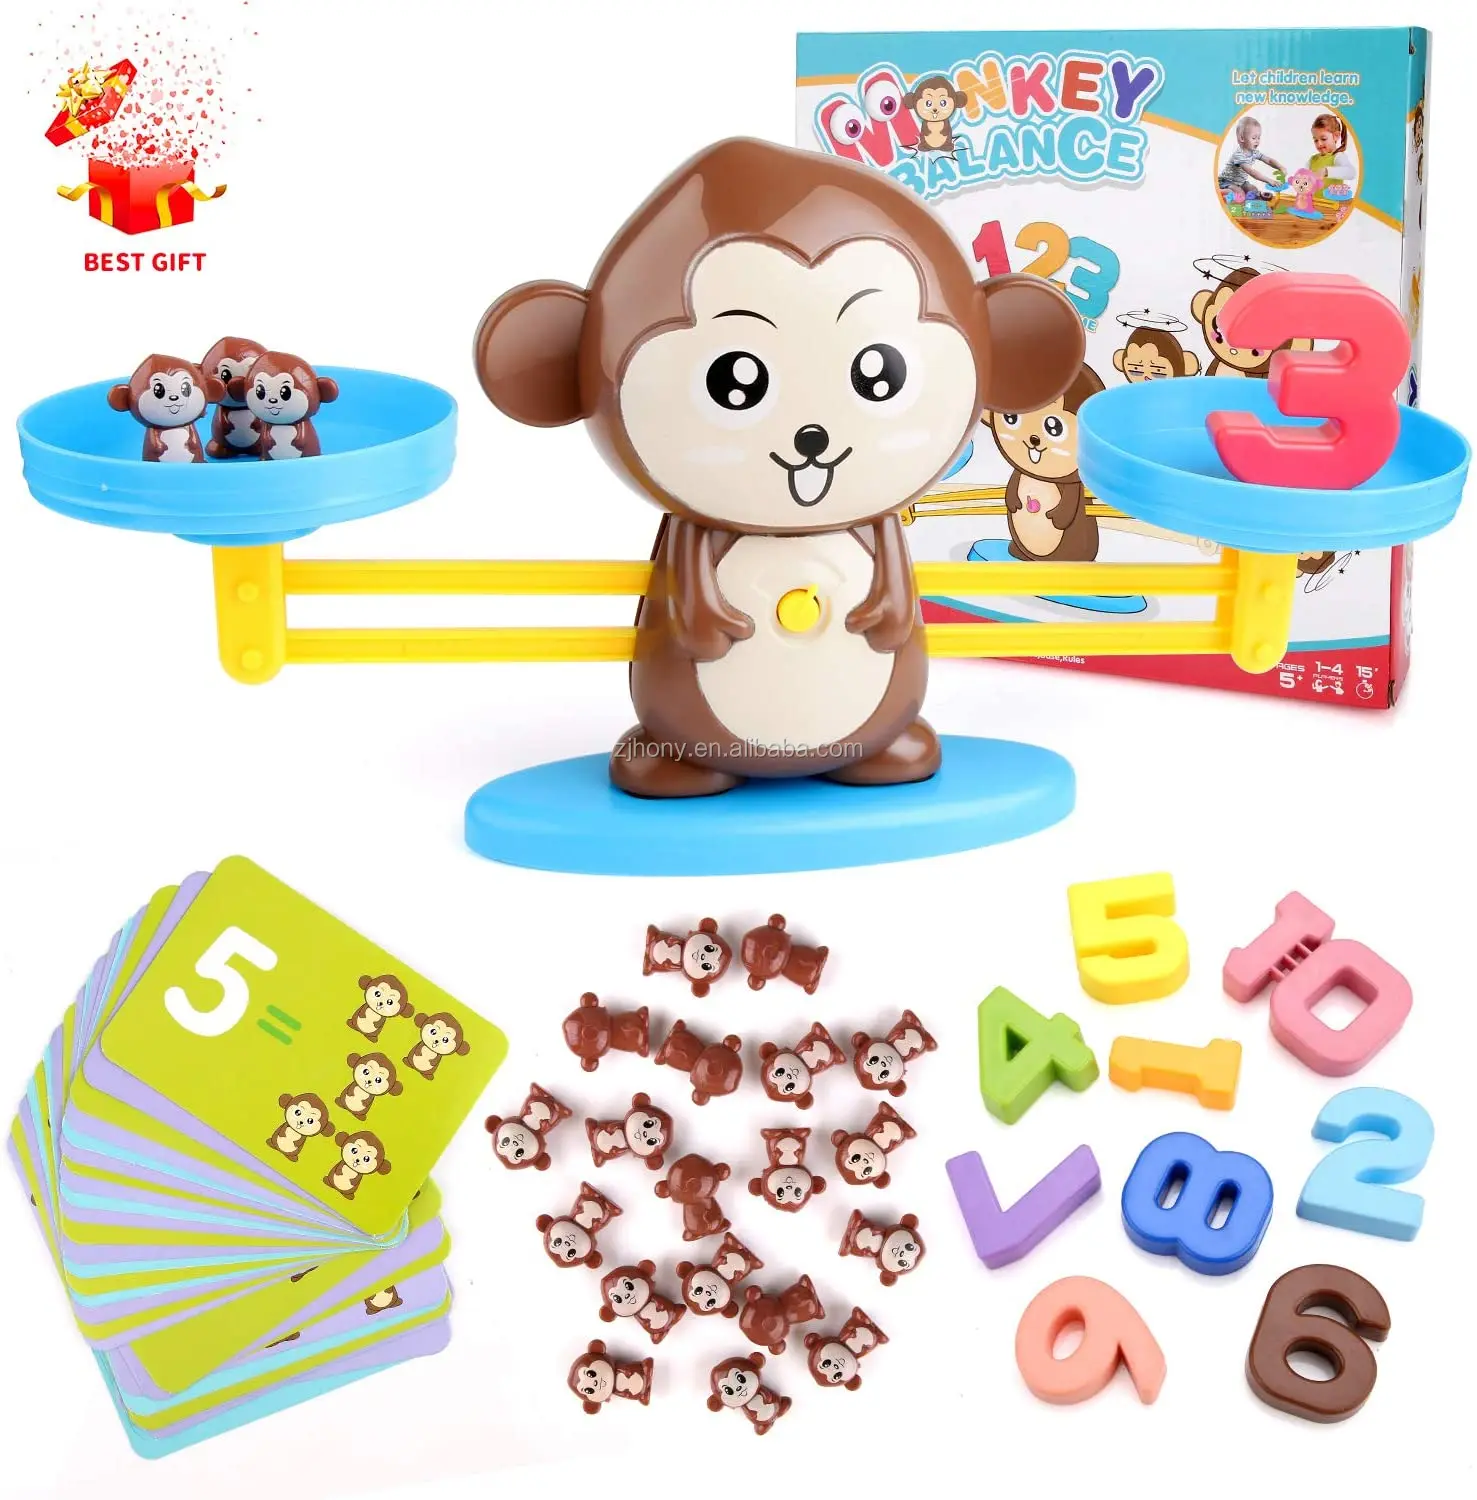 CoolToys Monkey Balance Cool Math Game for Girls & BoysFun Educational 